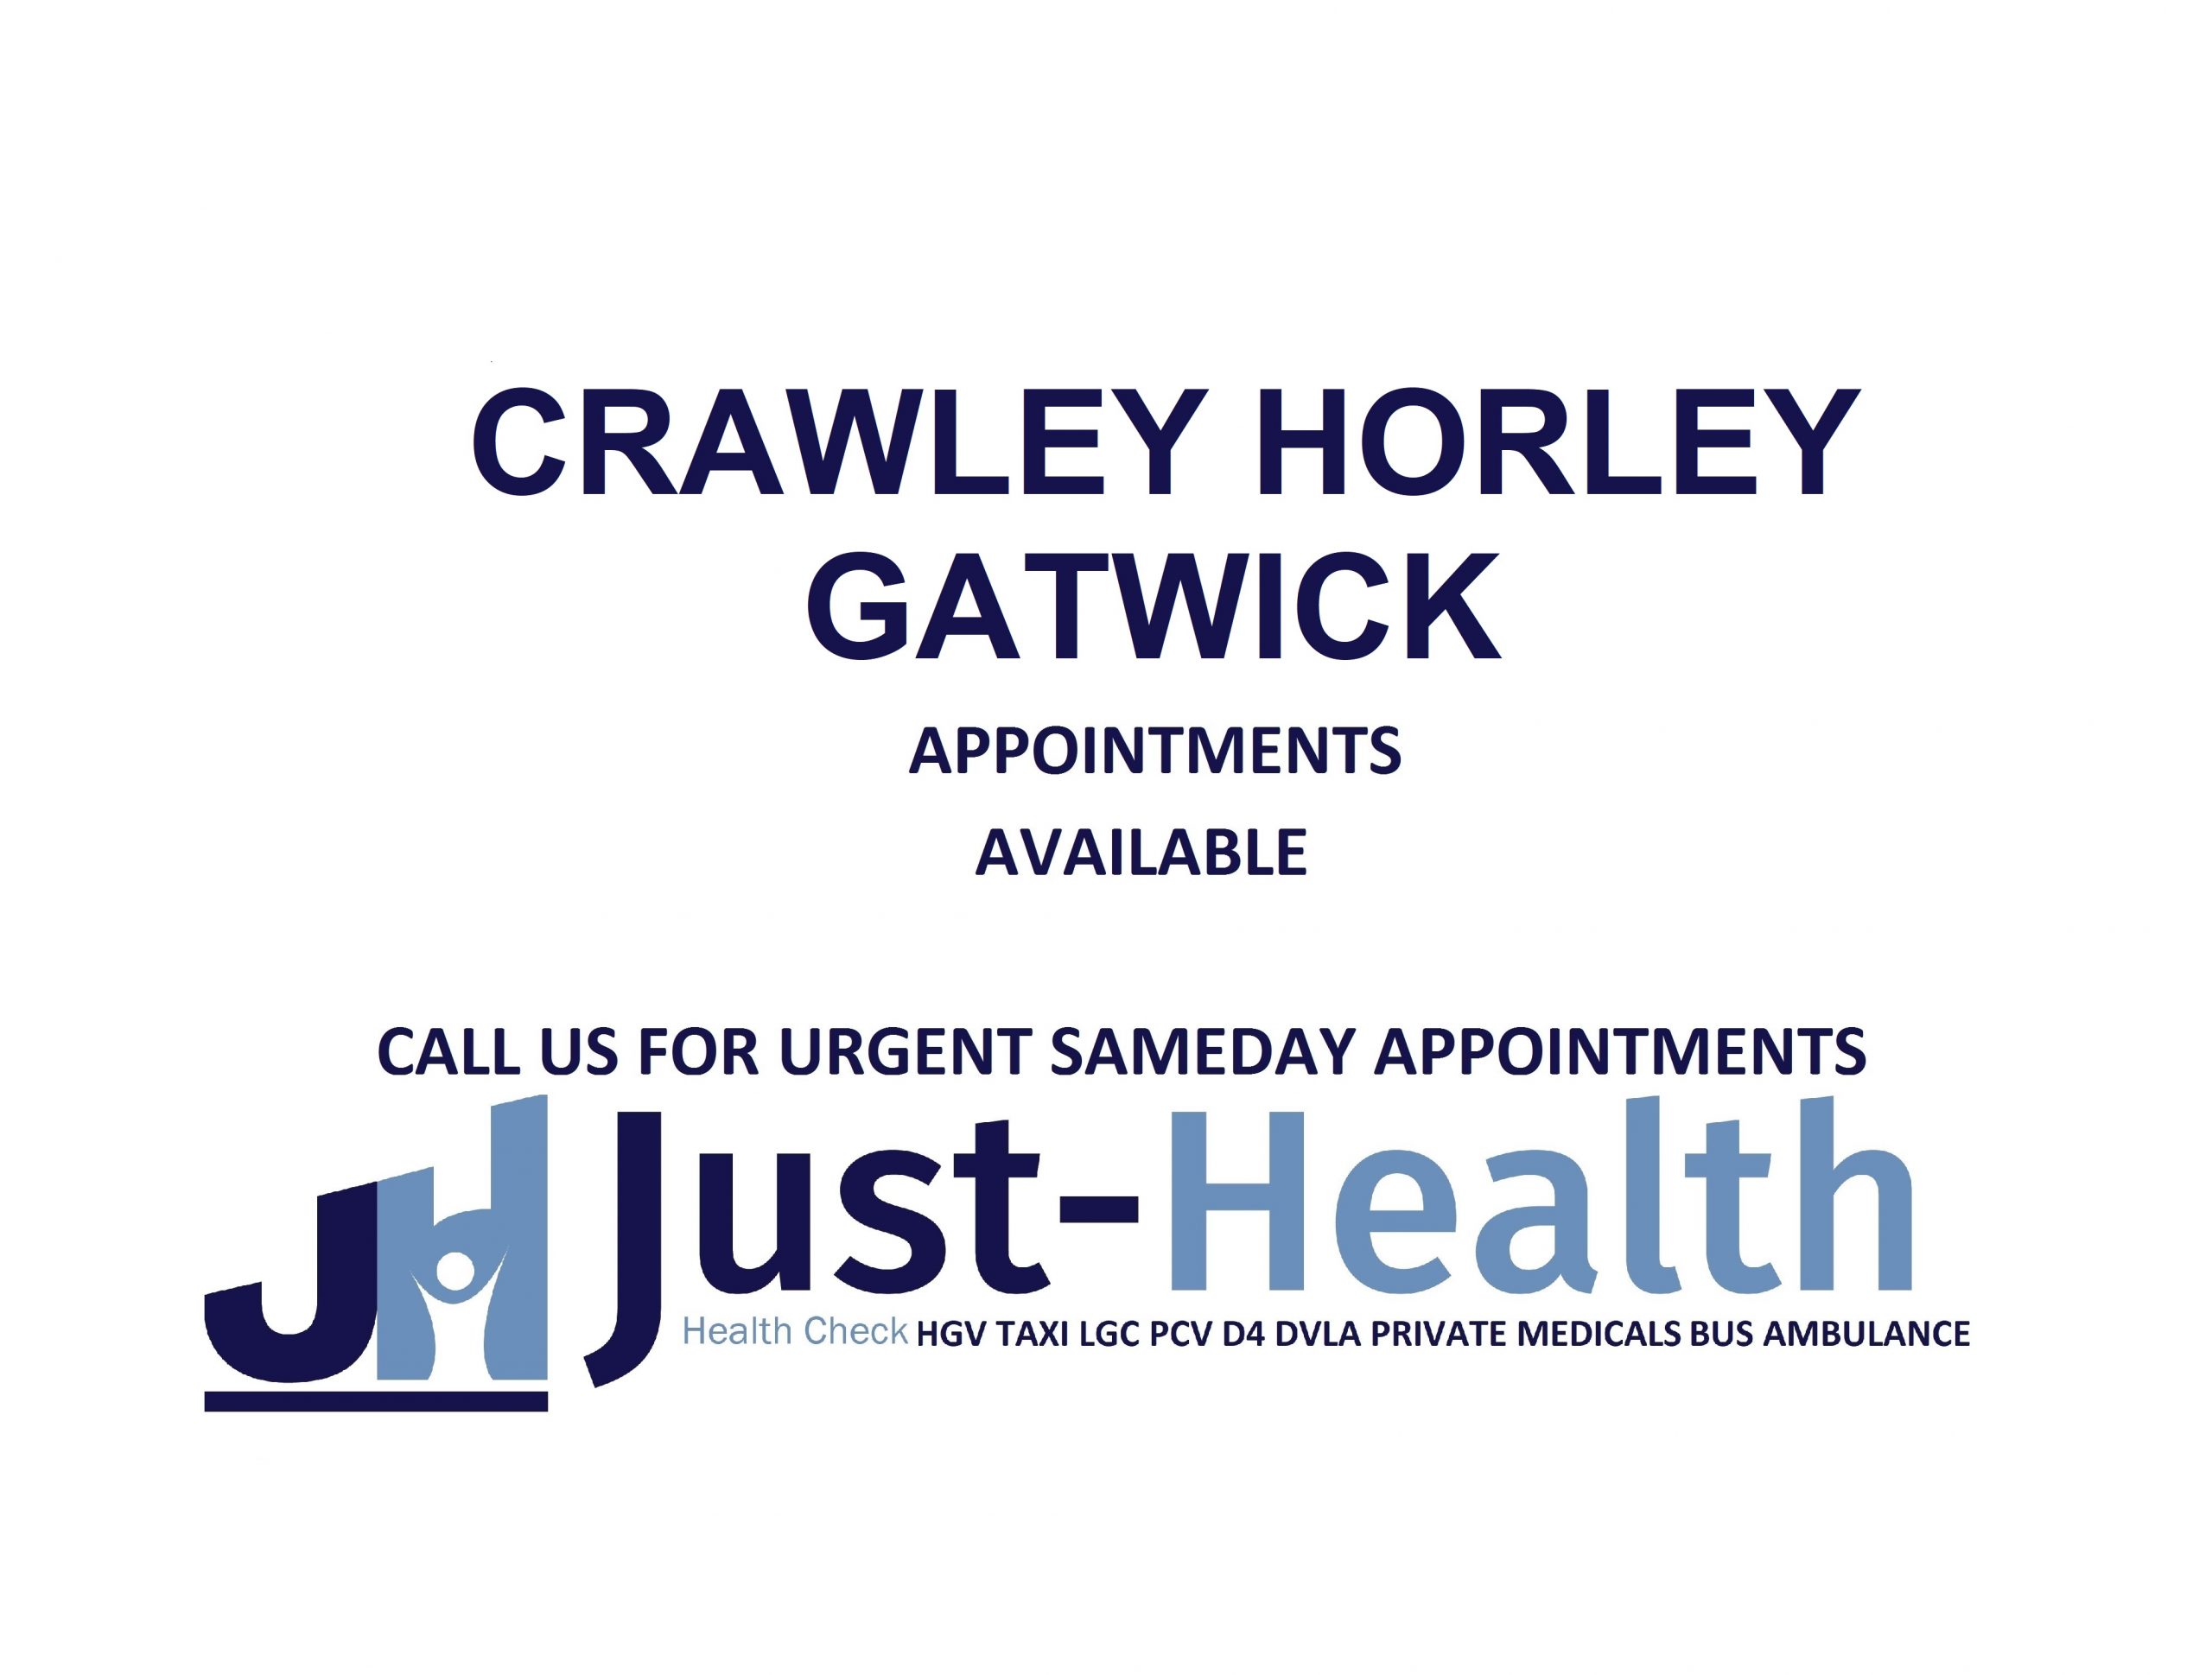 HGV Medical Horley Gatwick Crawley